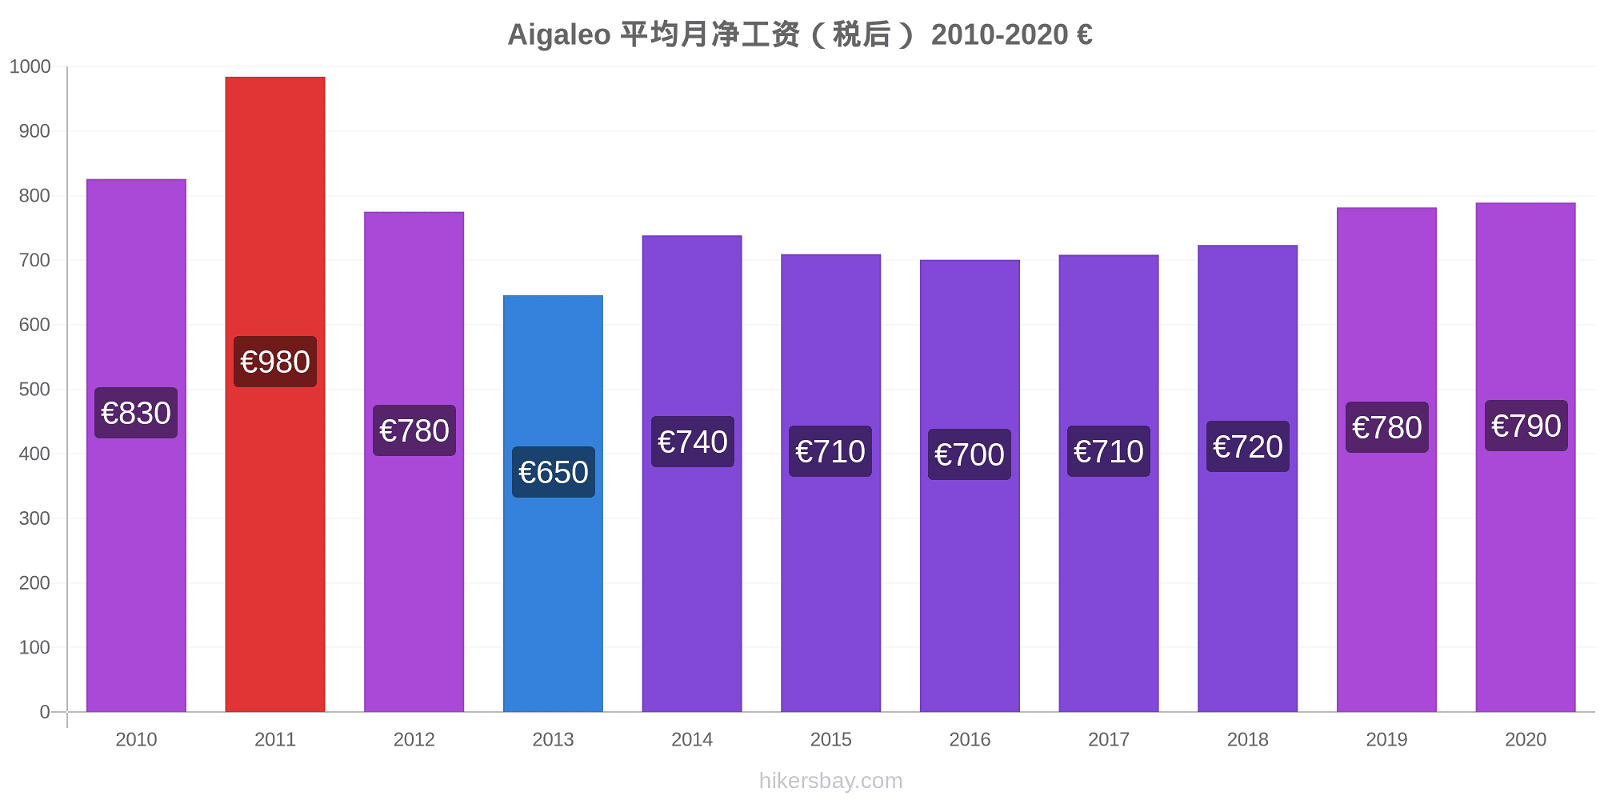 Aigaleo 价格变化 平均每月净工资 （后税） hikersbay.com